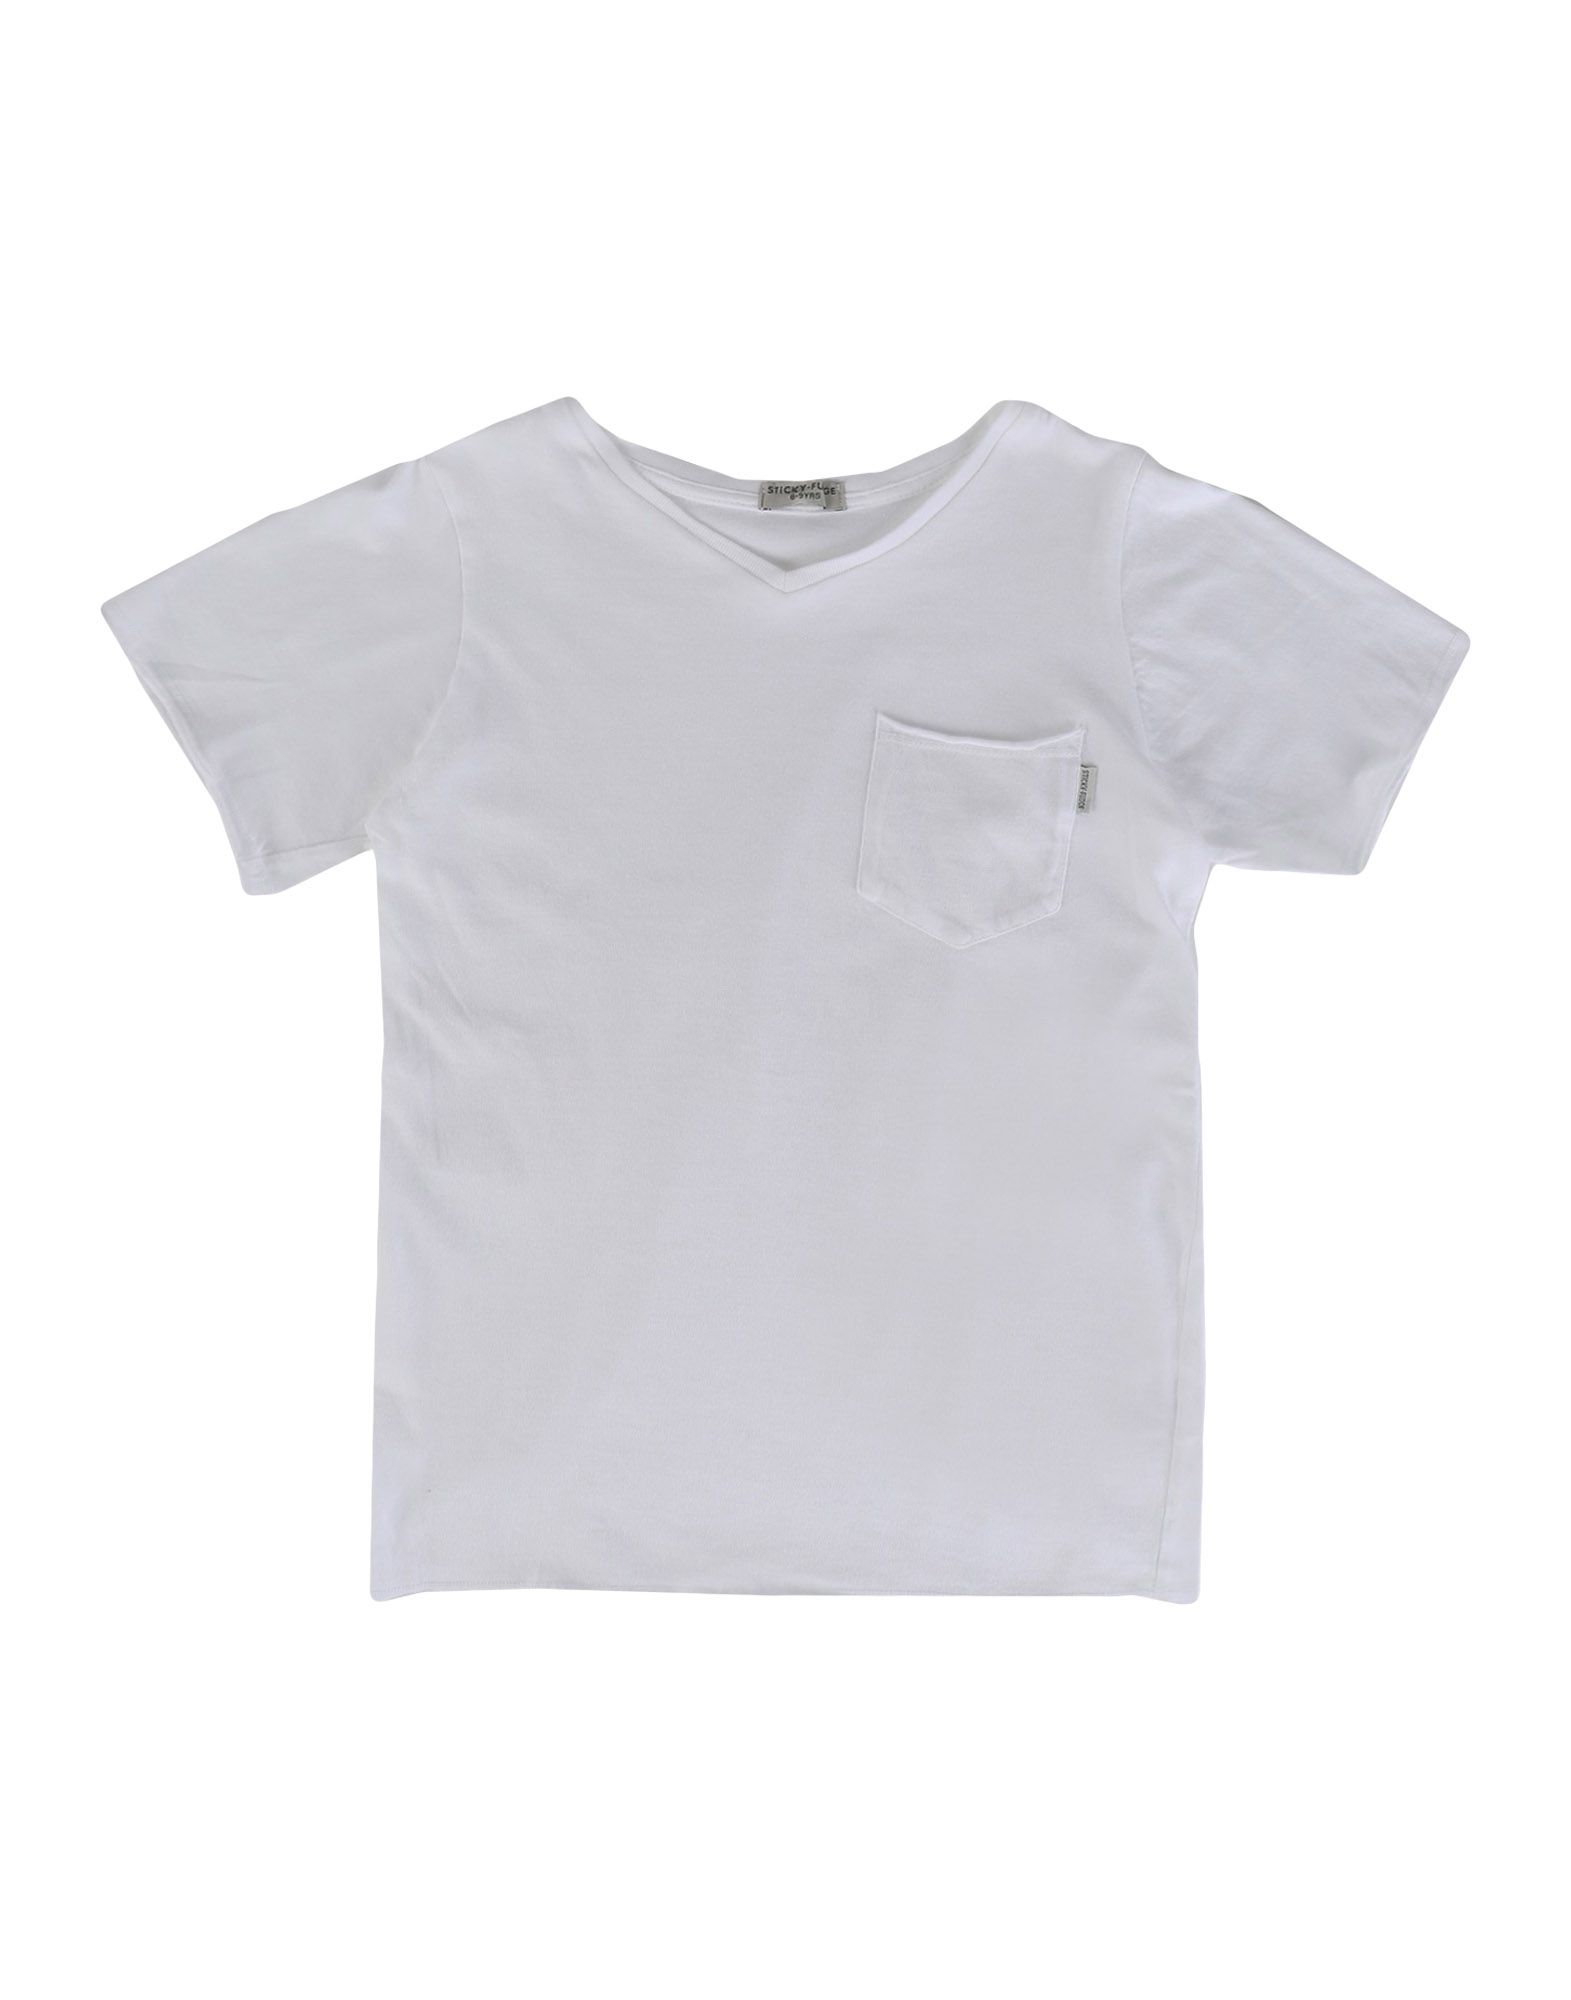 Sticky Fudge Kids' T-shirts In White